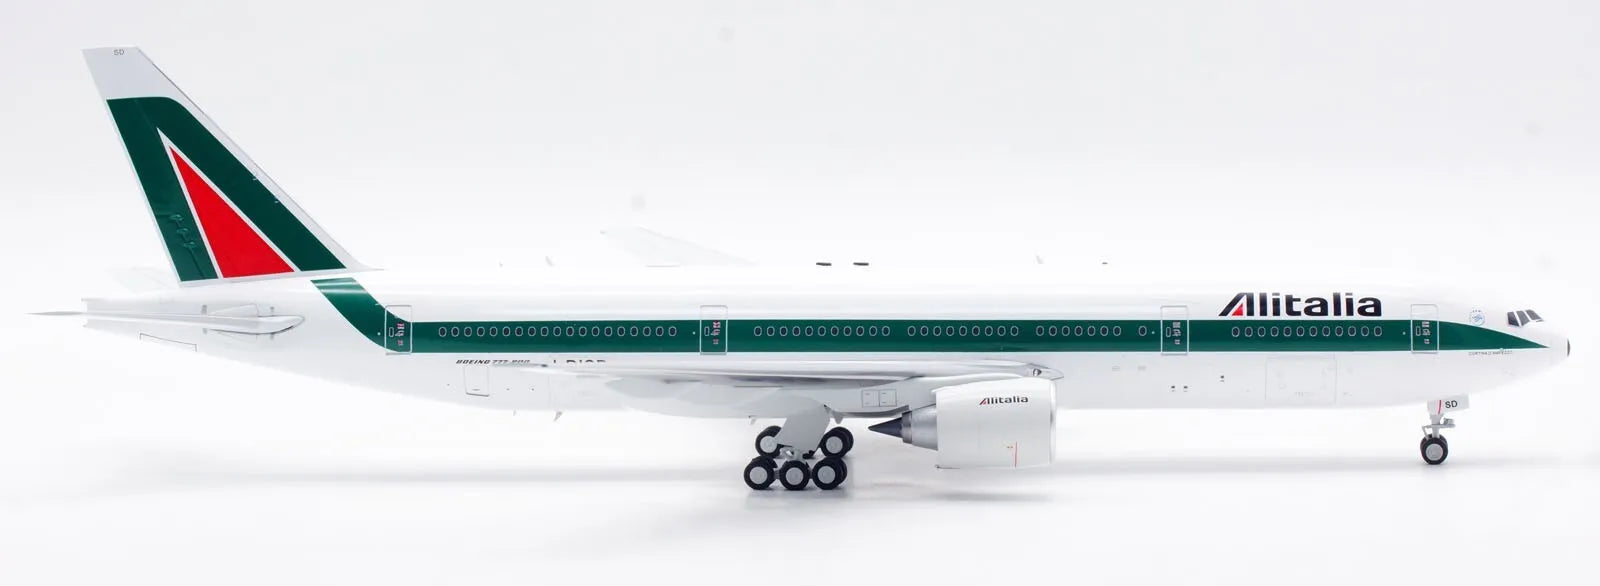 Alitalia / Boeing 777-200 / I-DISD / IF772AZ1223 /  elaviadormodels